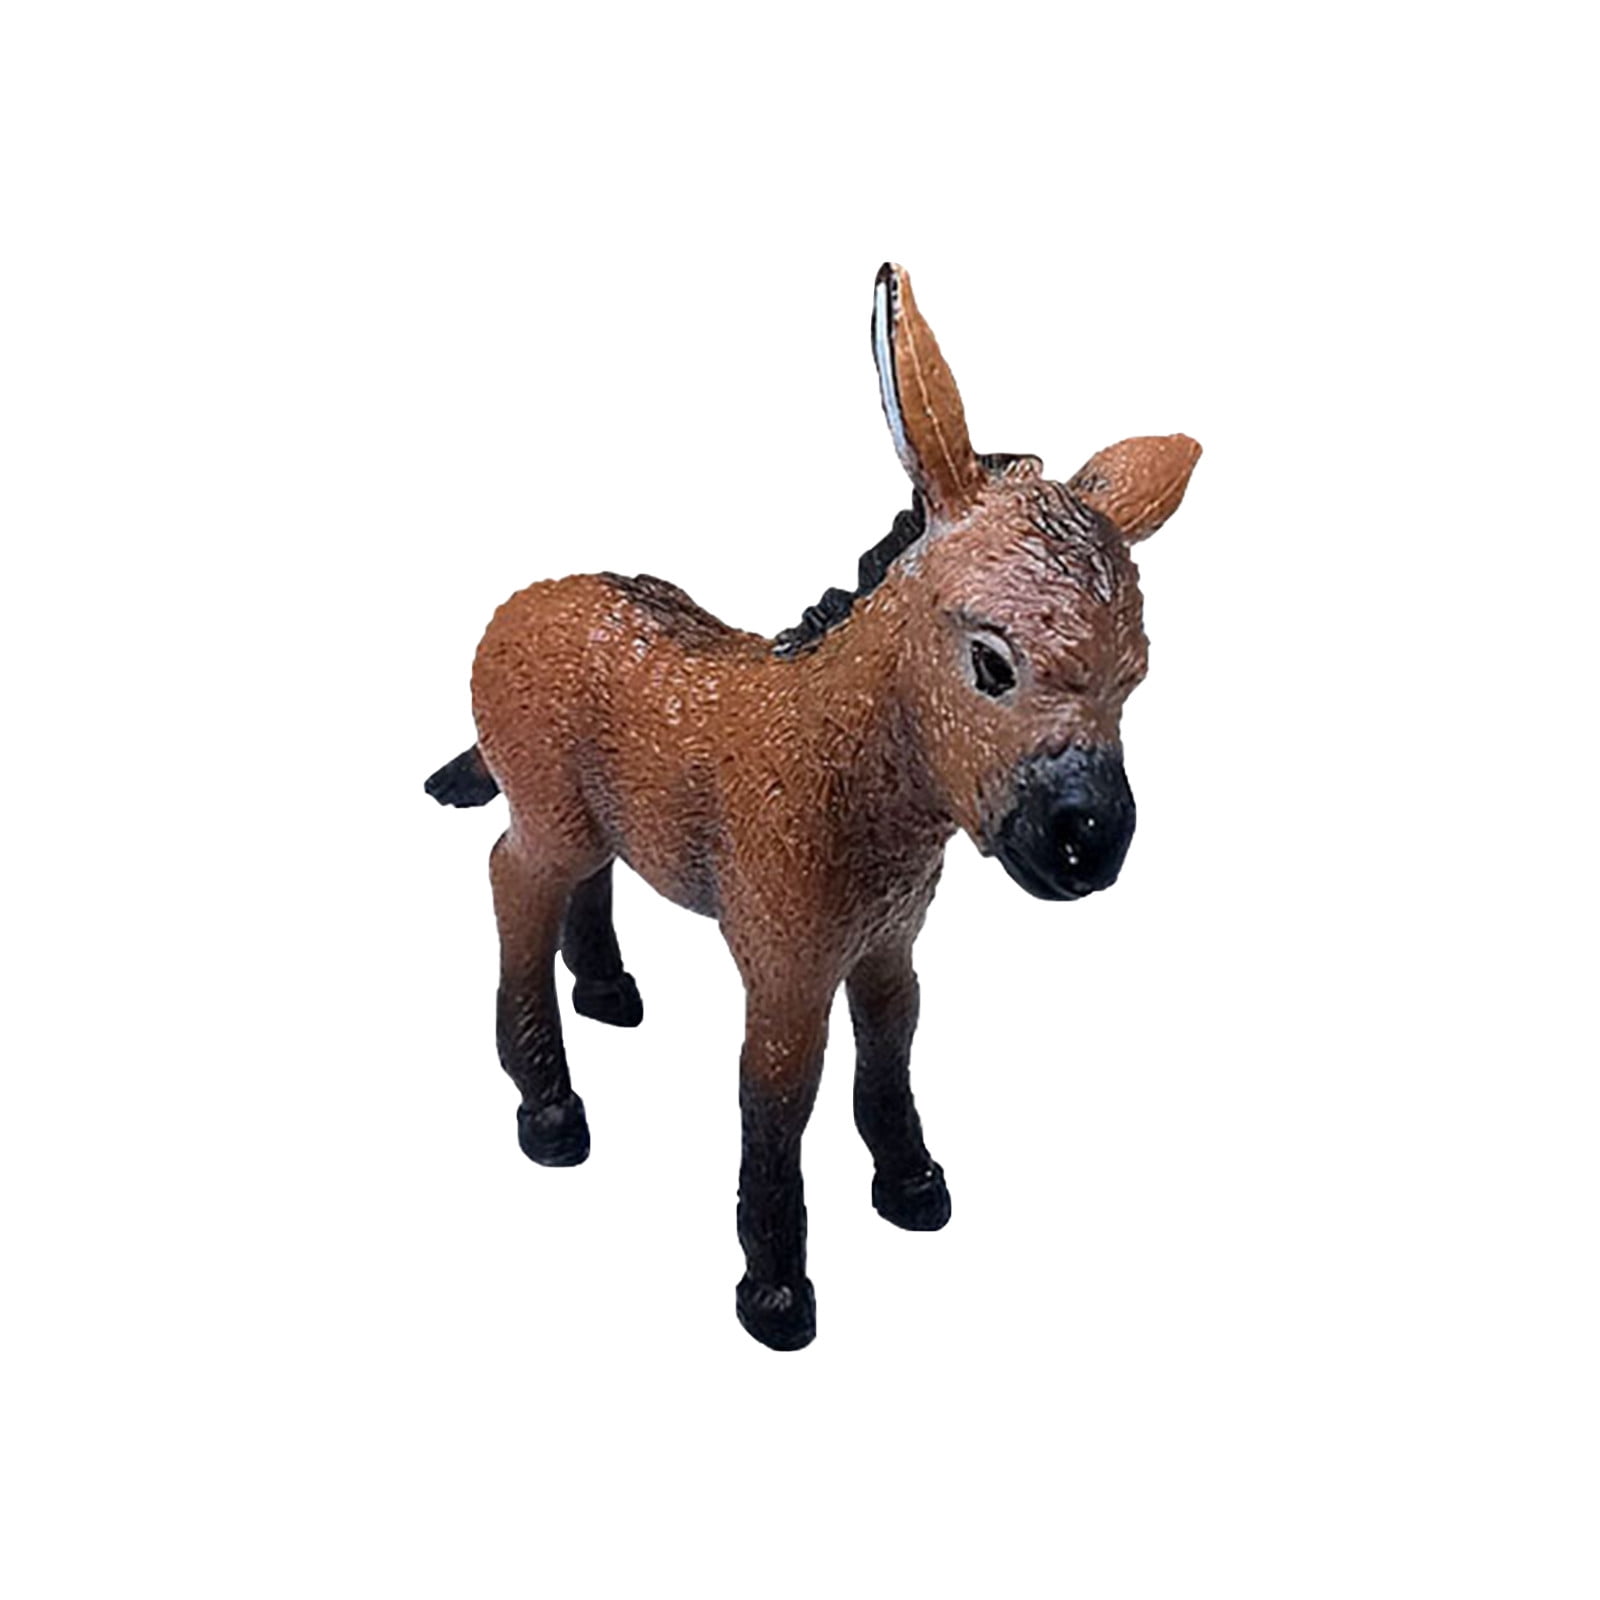 Schleich Donkey Animal Farm Figure NEW IN STOCK Educational 